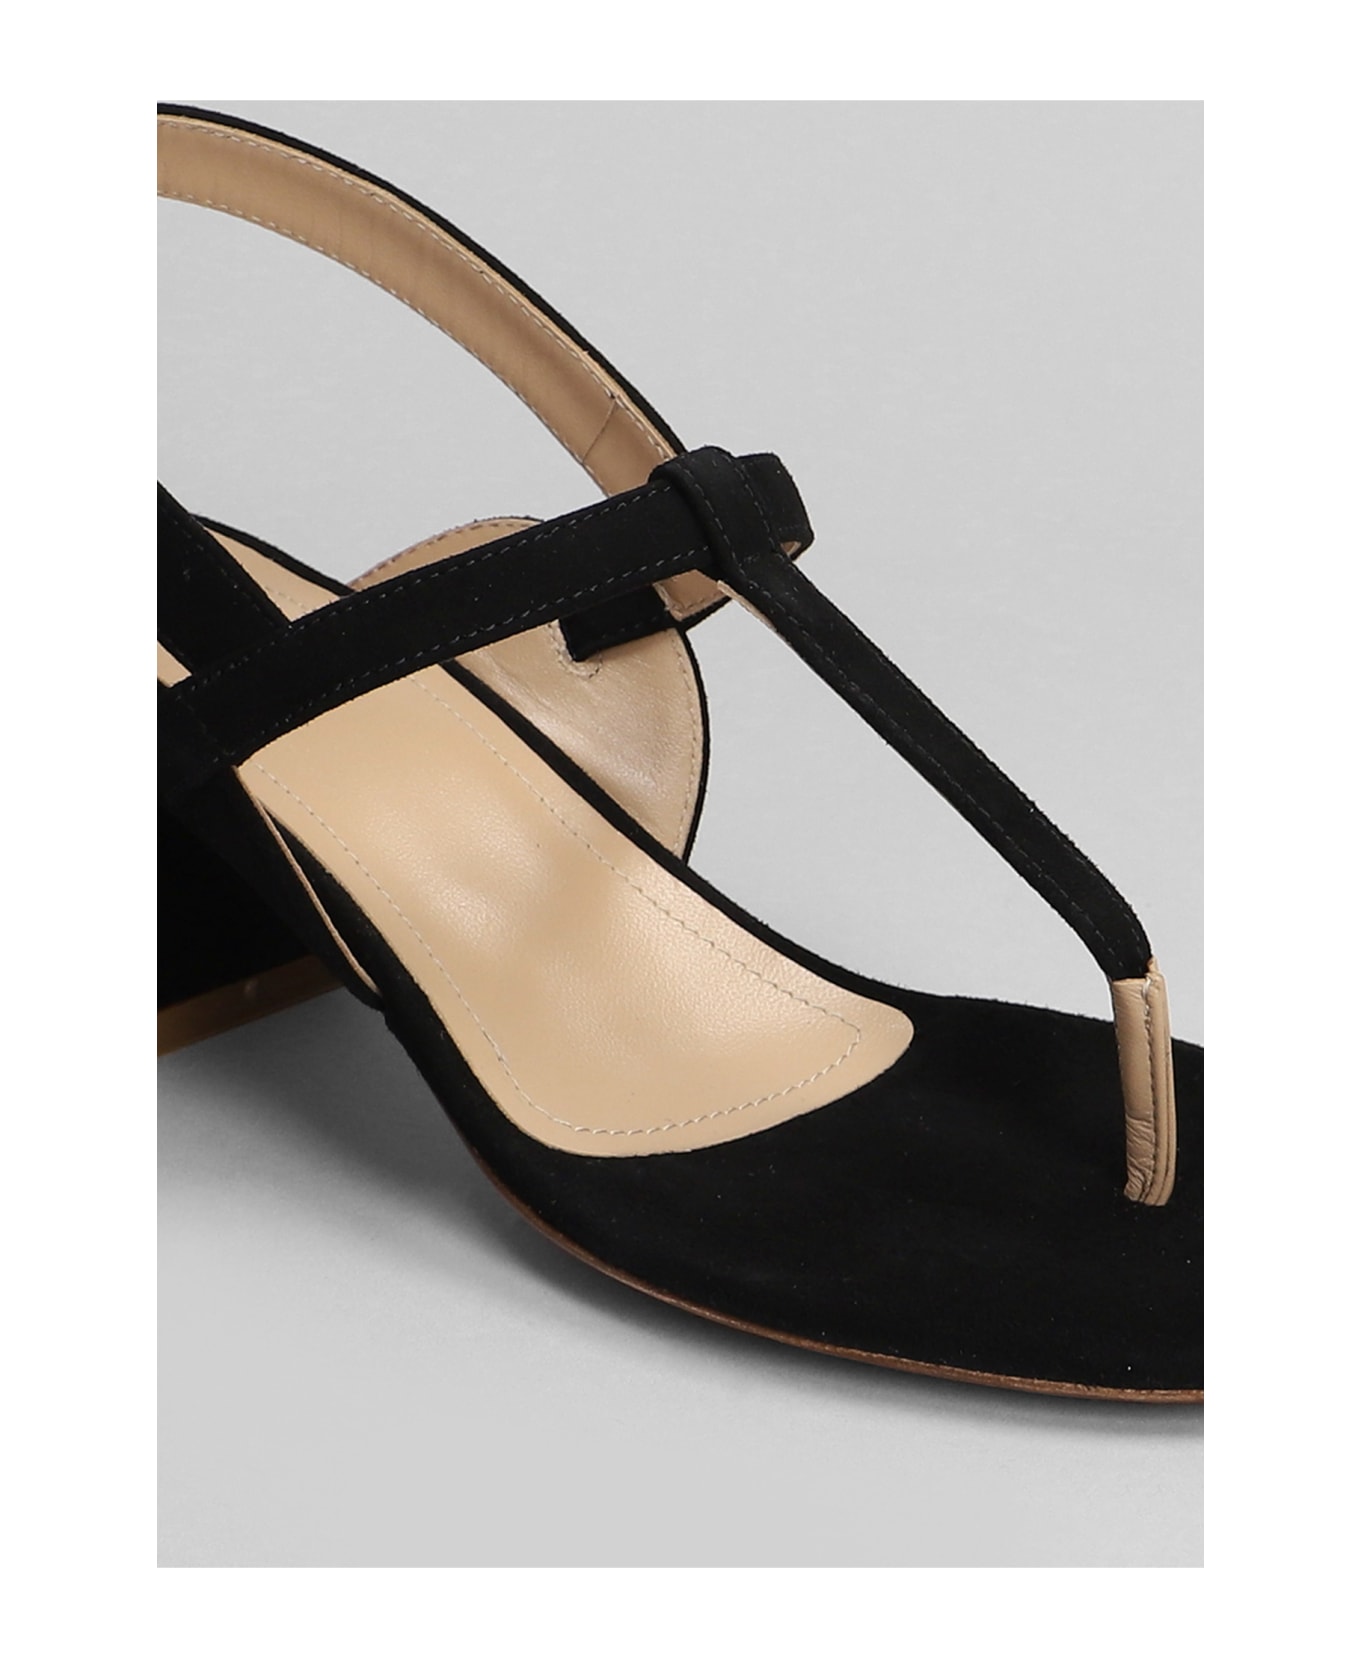 Relac Sandals In Black Suede - black